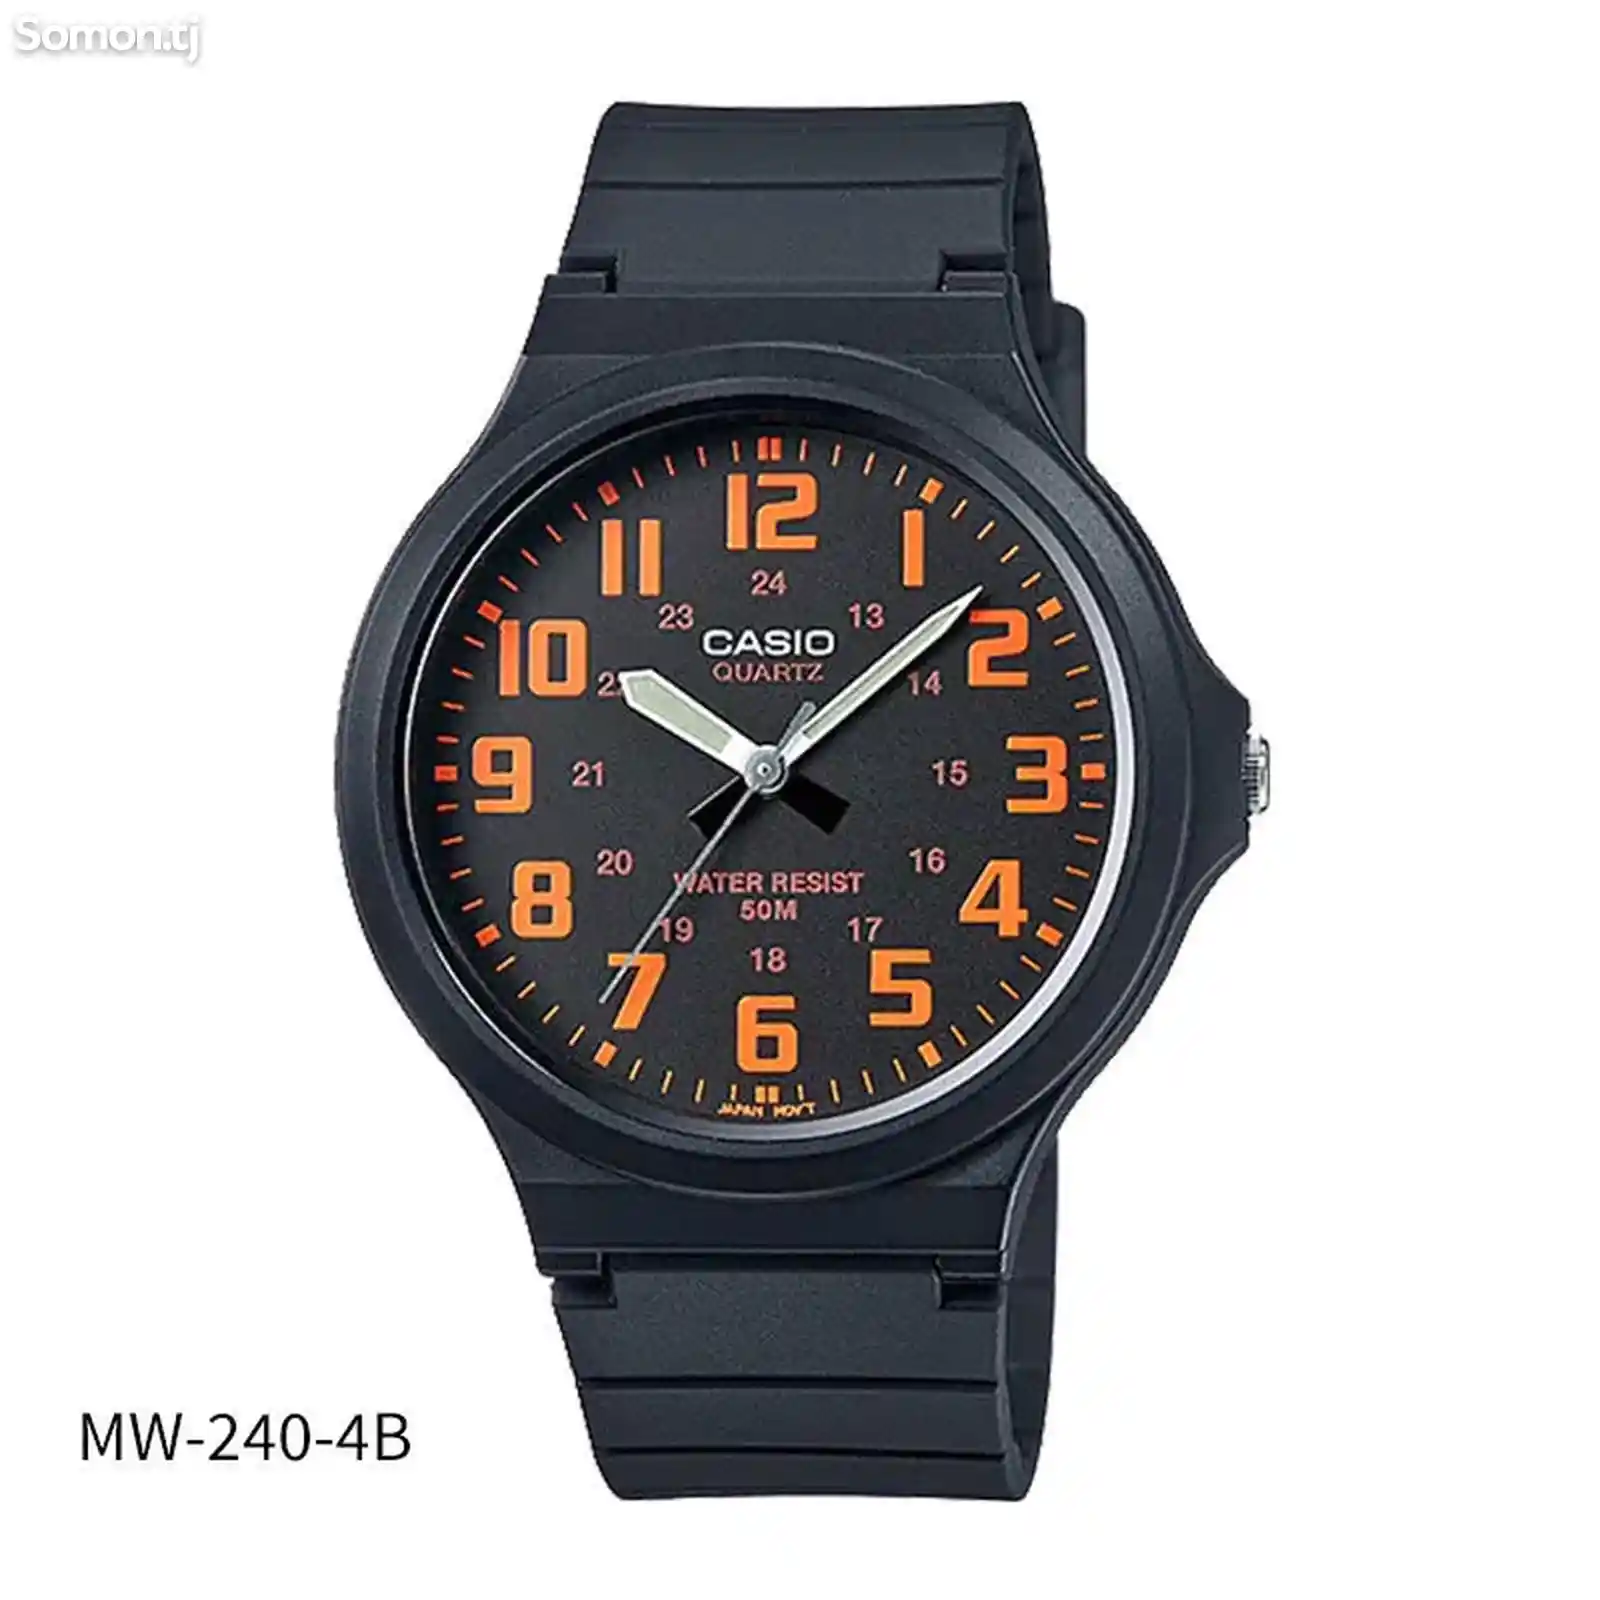 Мужские часы Casio MW-240-4B-1